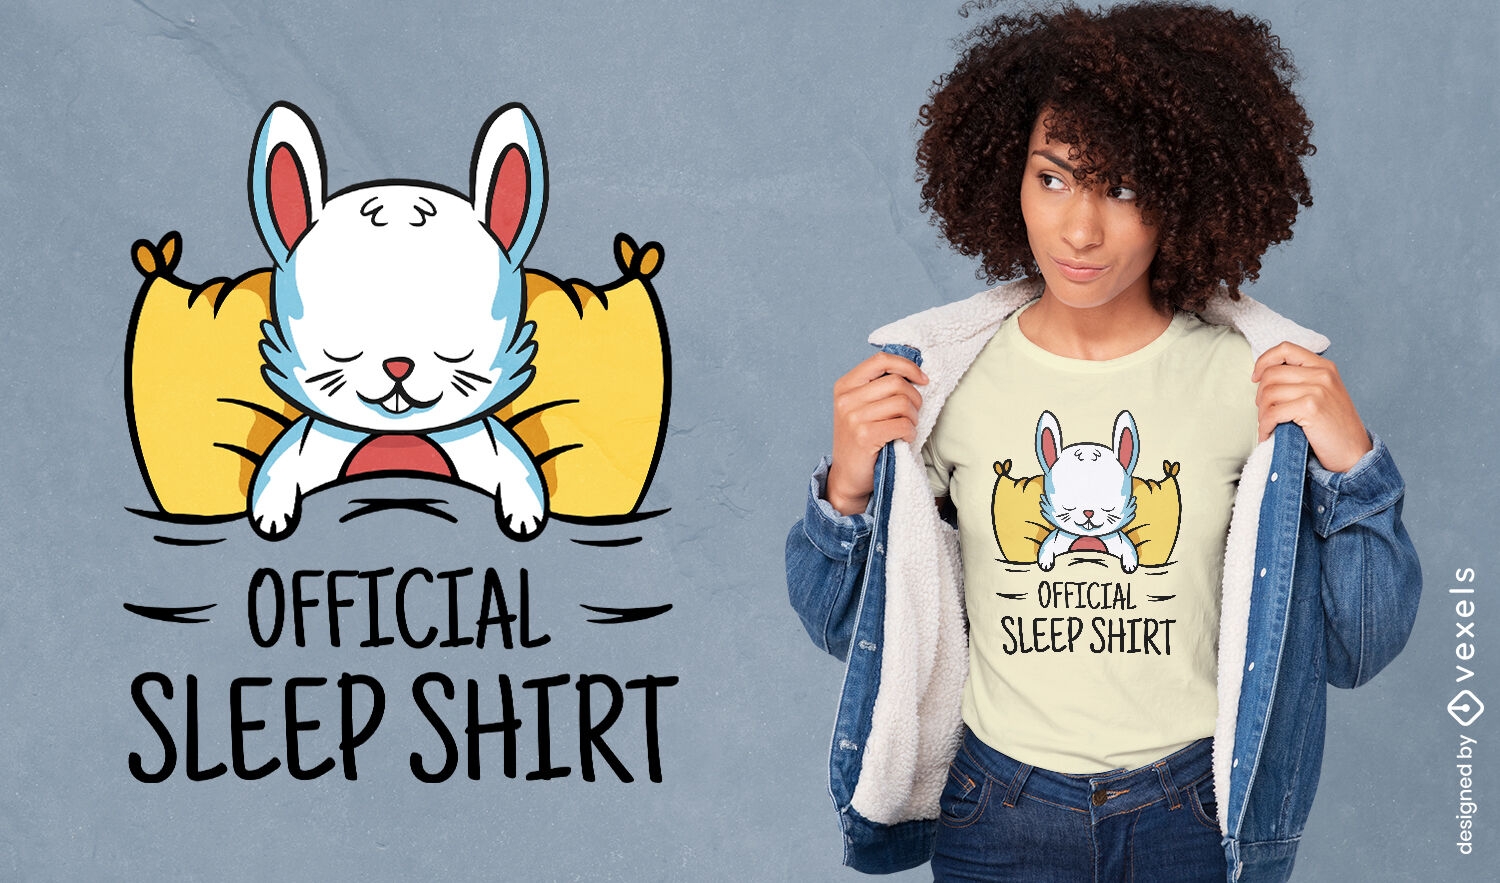 Dise?o oficial de camiseta de conejo para dormir.